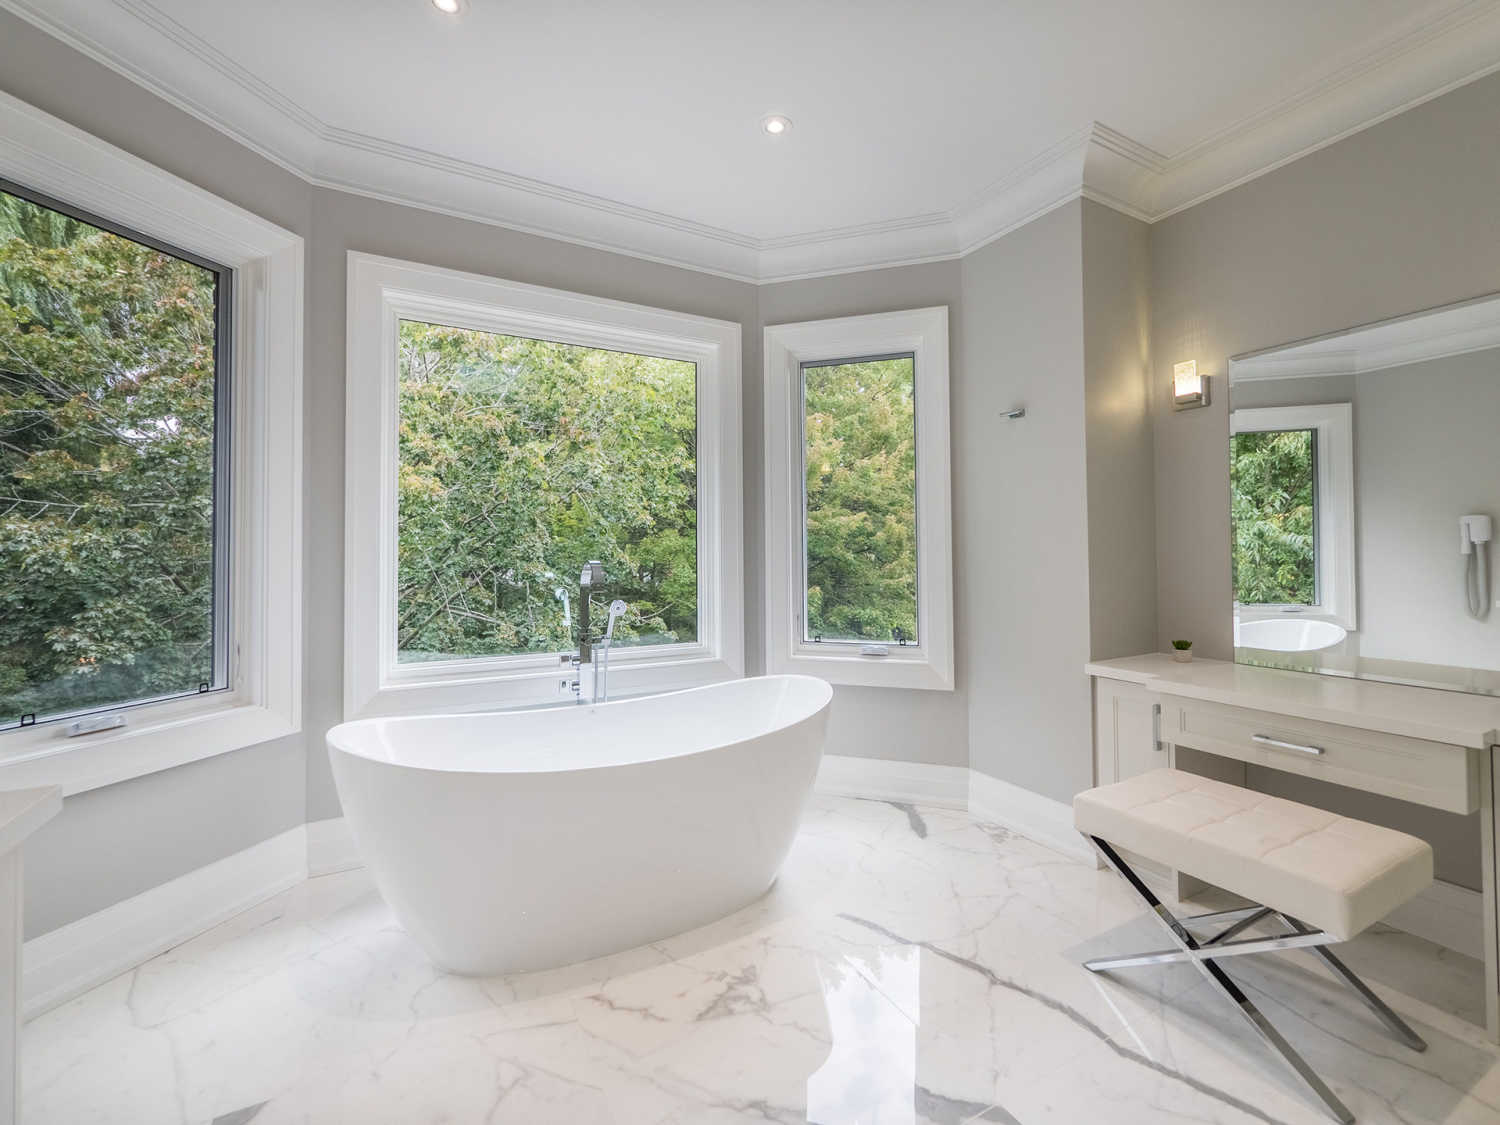 5 Stylish Bathroom Window Ideas to Brighten Your Space